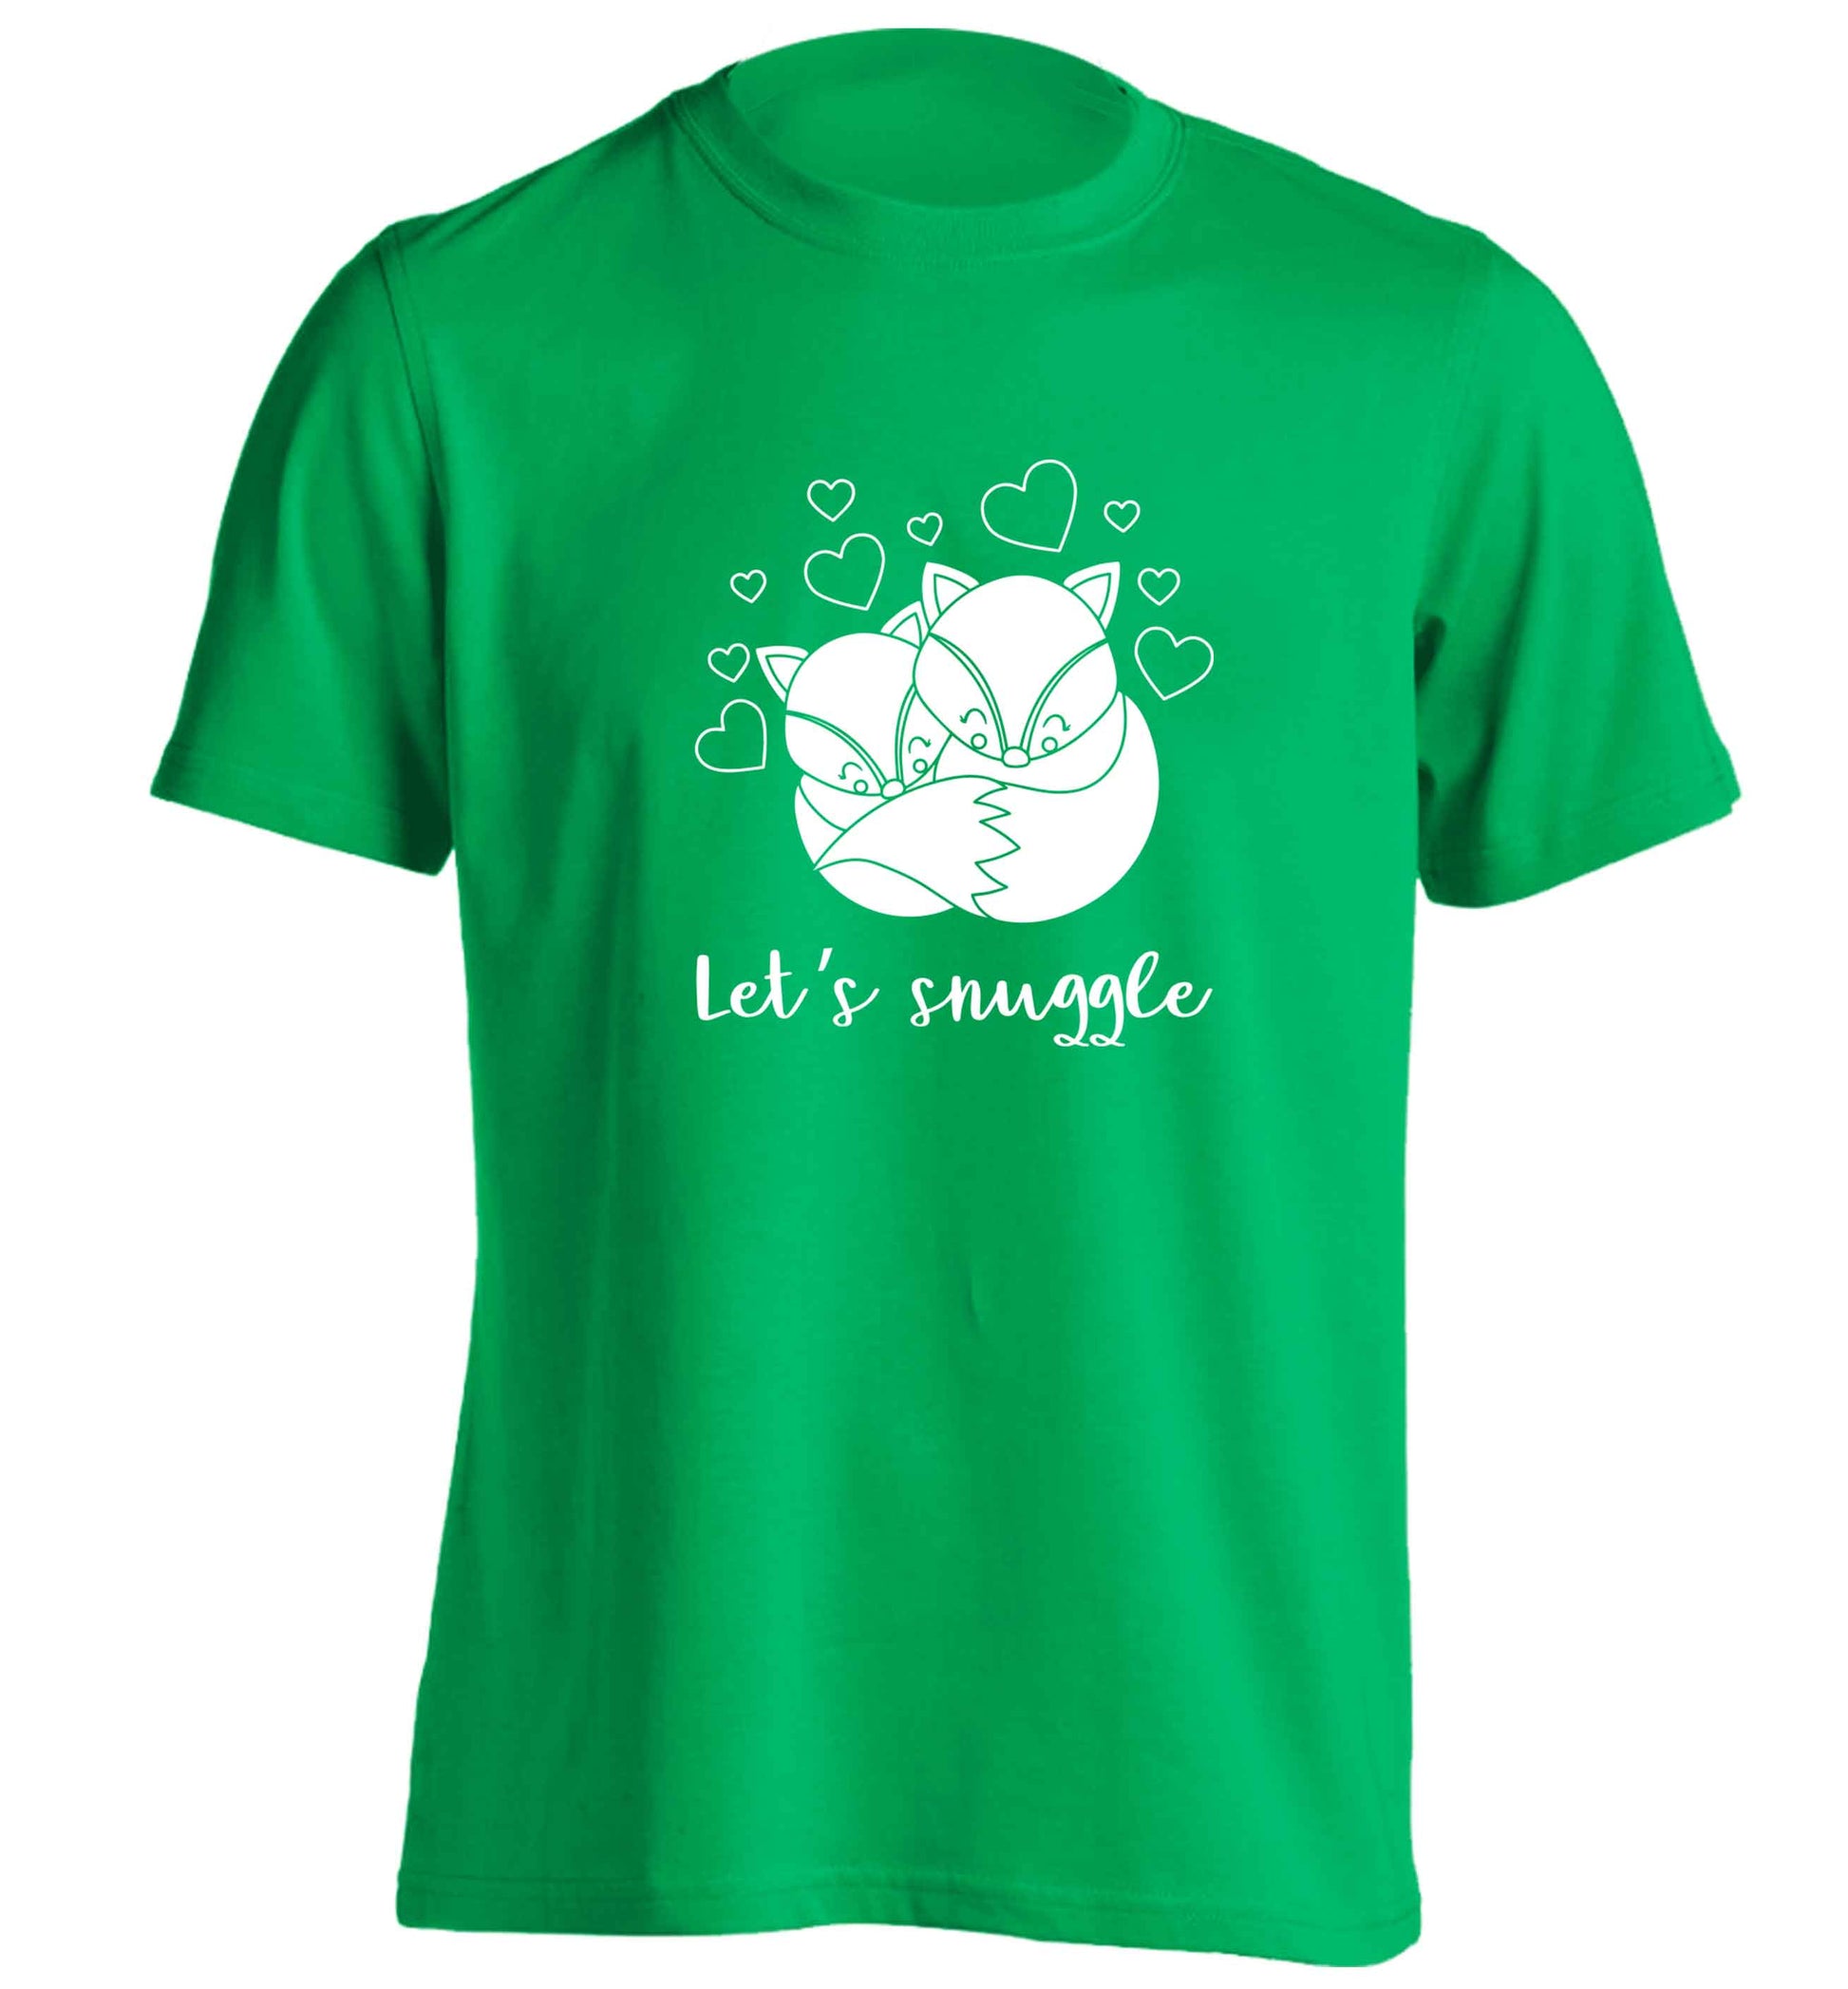 Let's snuggle adults unisex green Tshirt 2XL